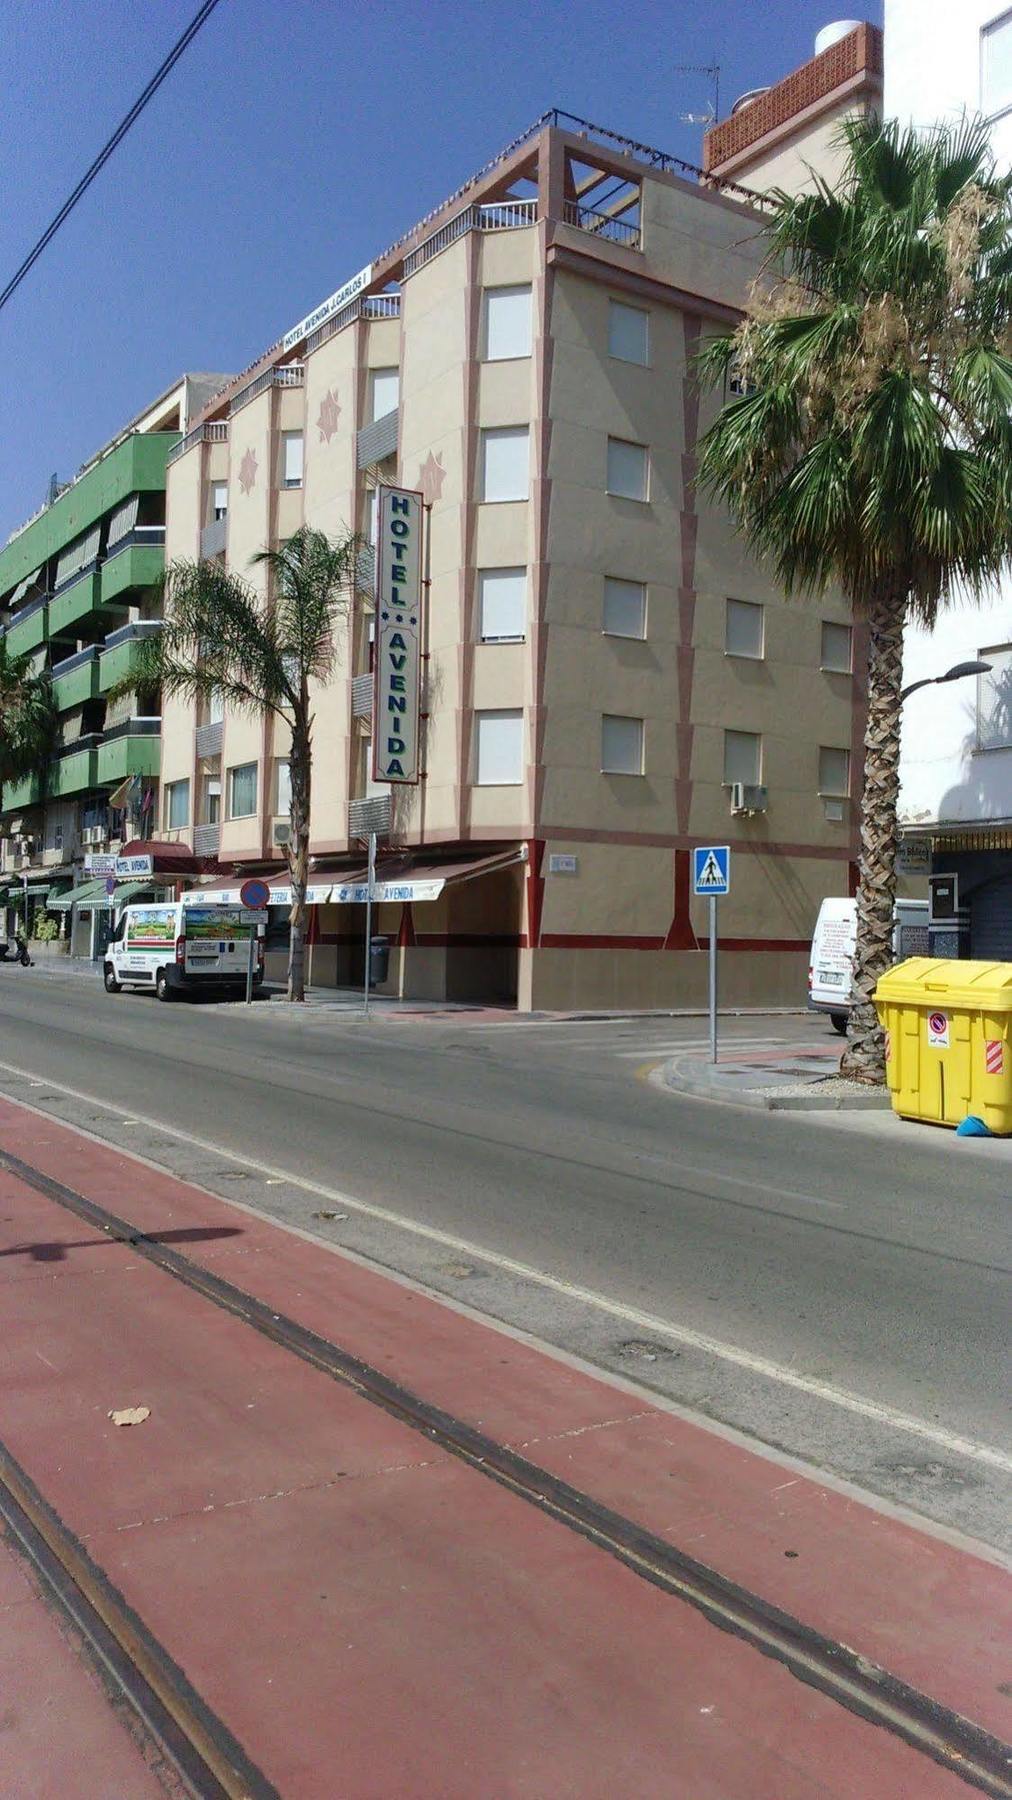 Hotel Velis - Avenida I Velez Exterior foto